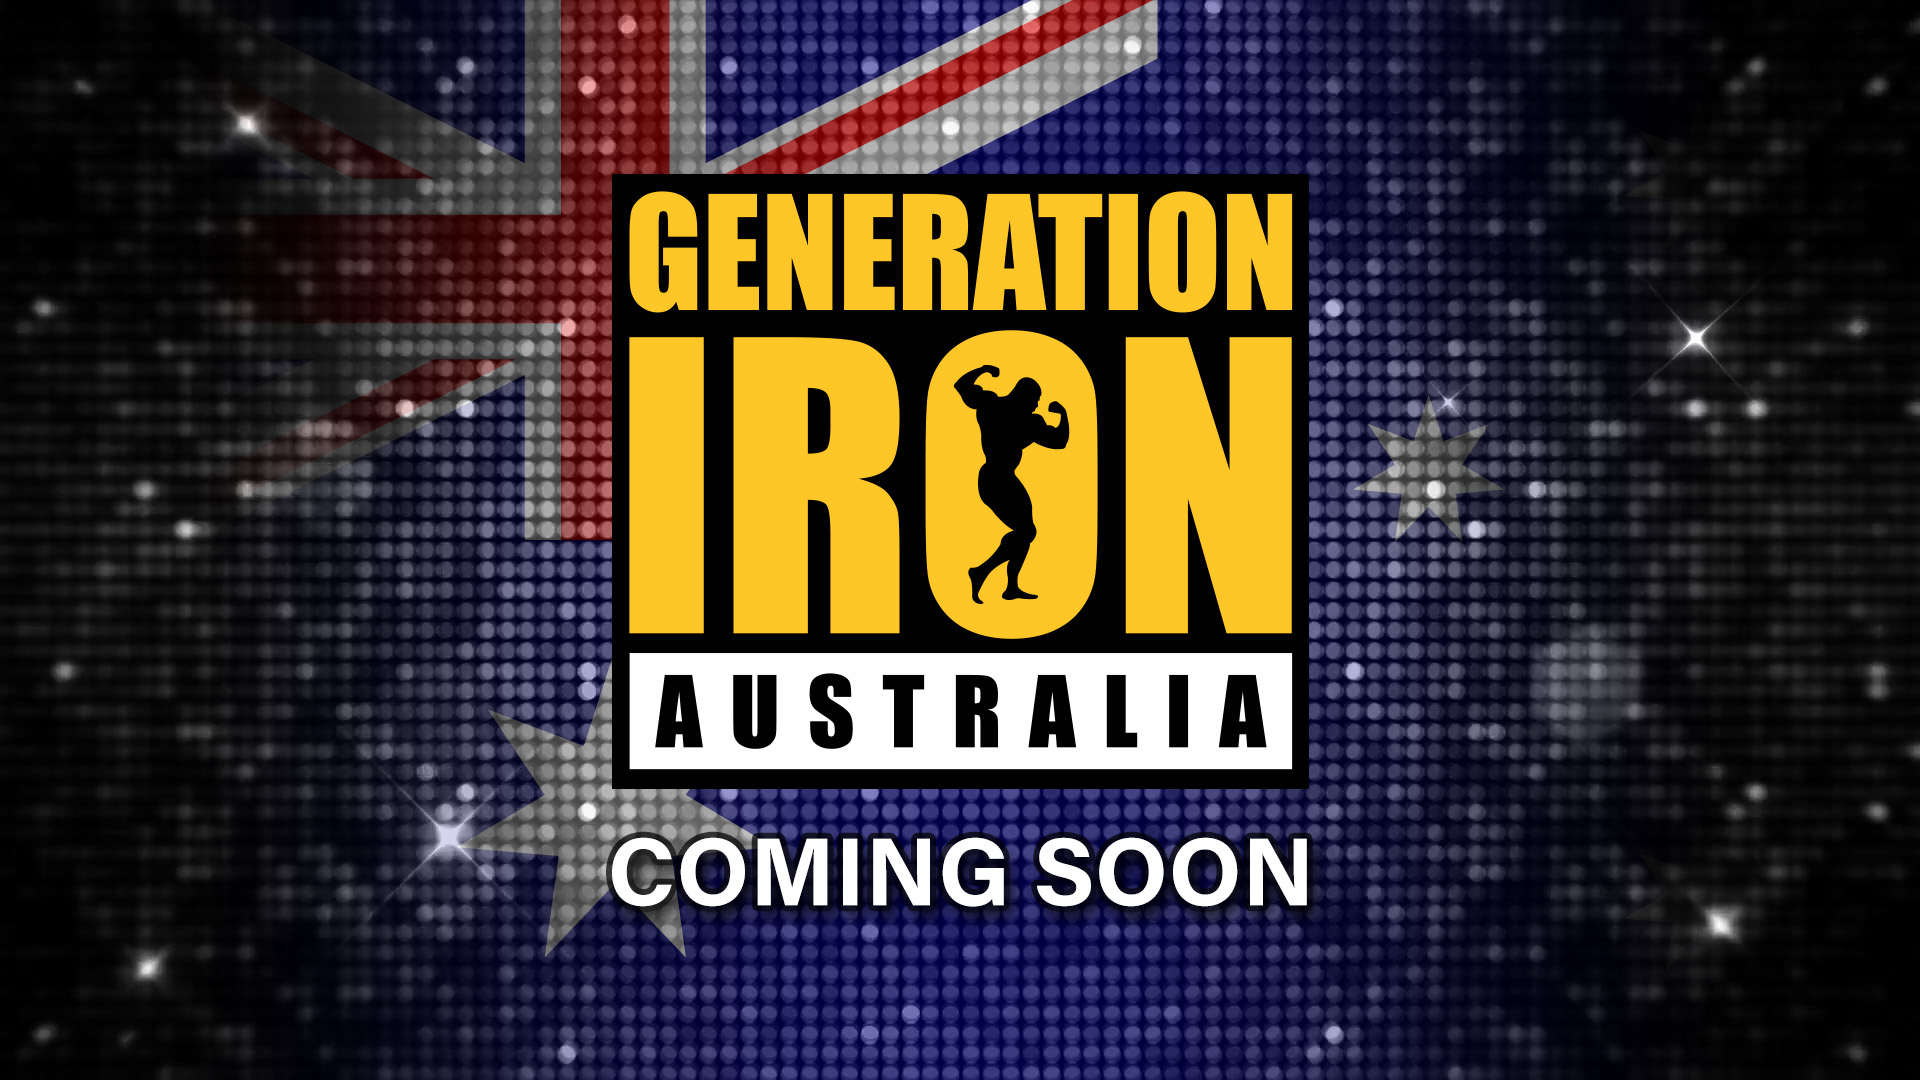 Generation Iron Australia Coming Soon